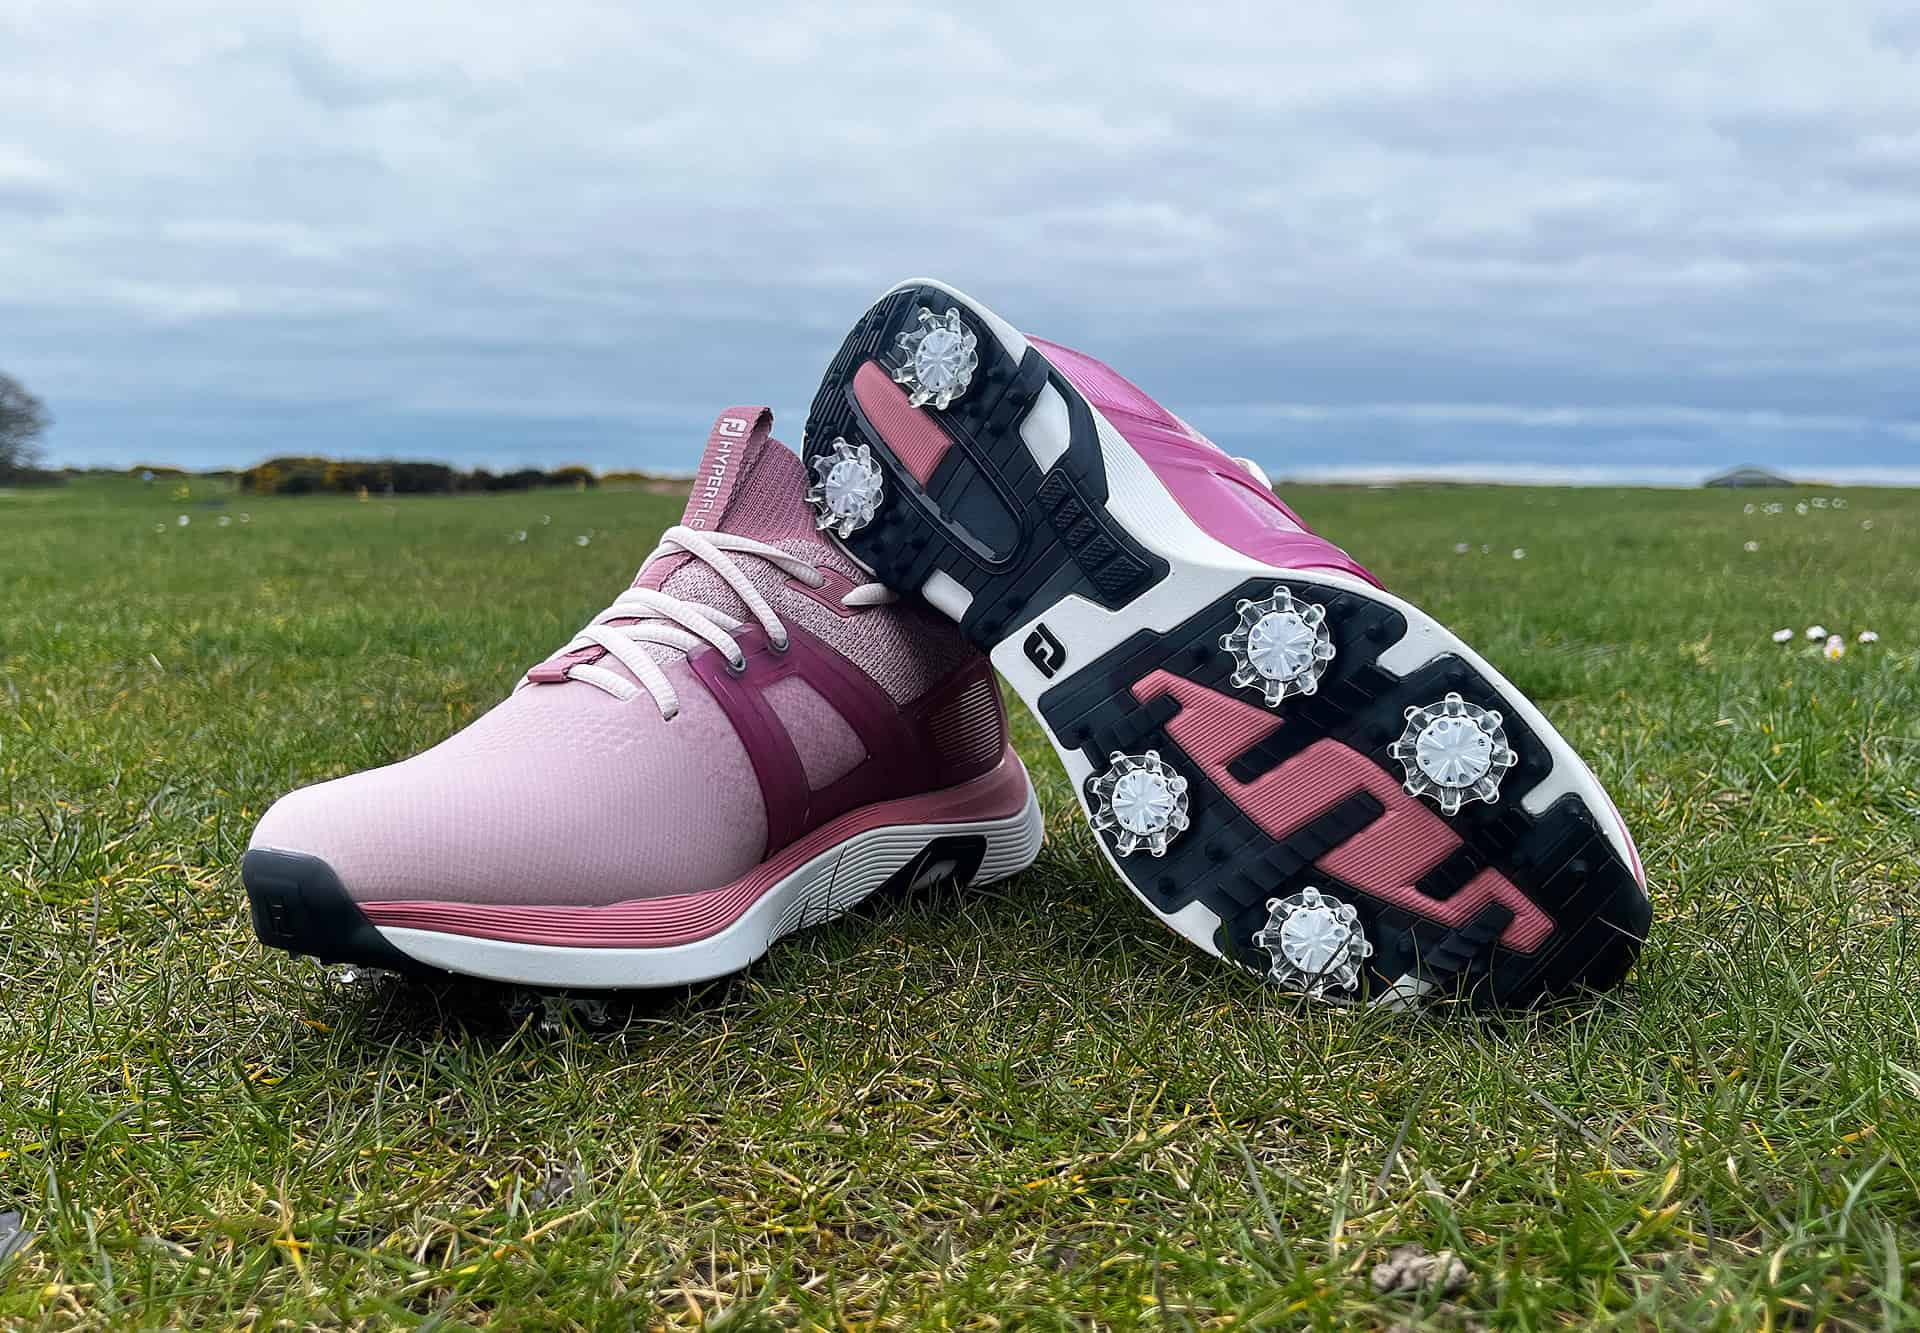 FootJoy HyperFlex Women's golf shoes review